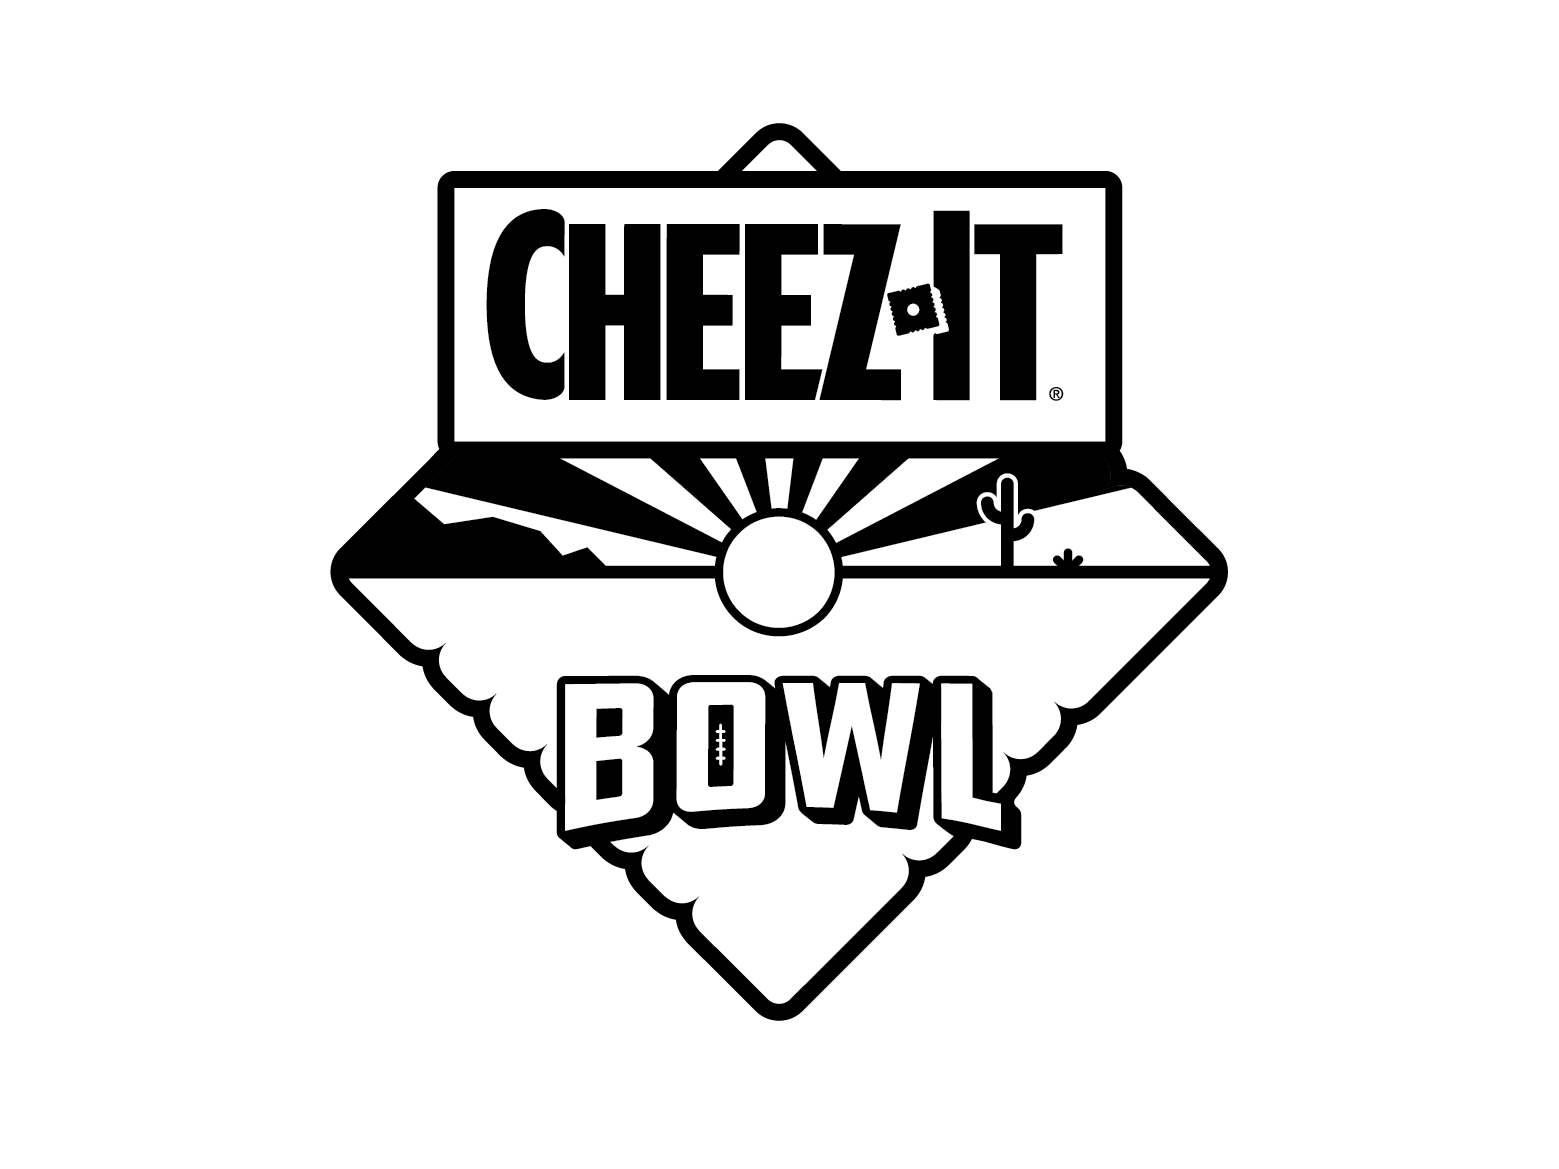 Cheez-It Logo - Cheez-It Bowl B&W Logo by Kenneth Gragson on Dribbble